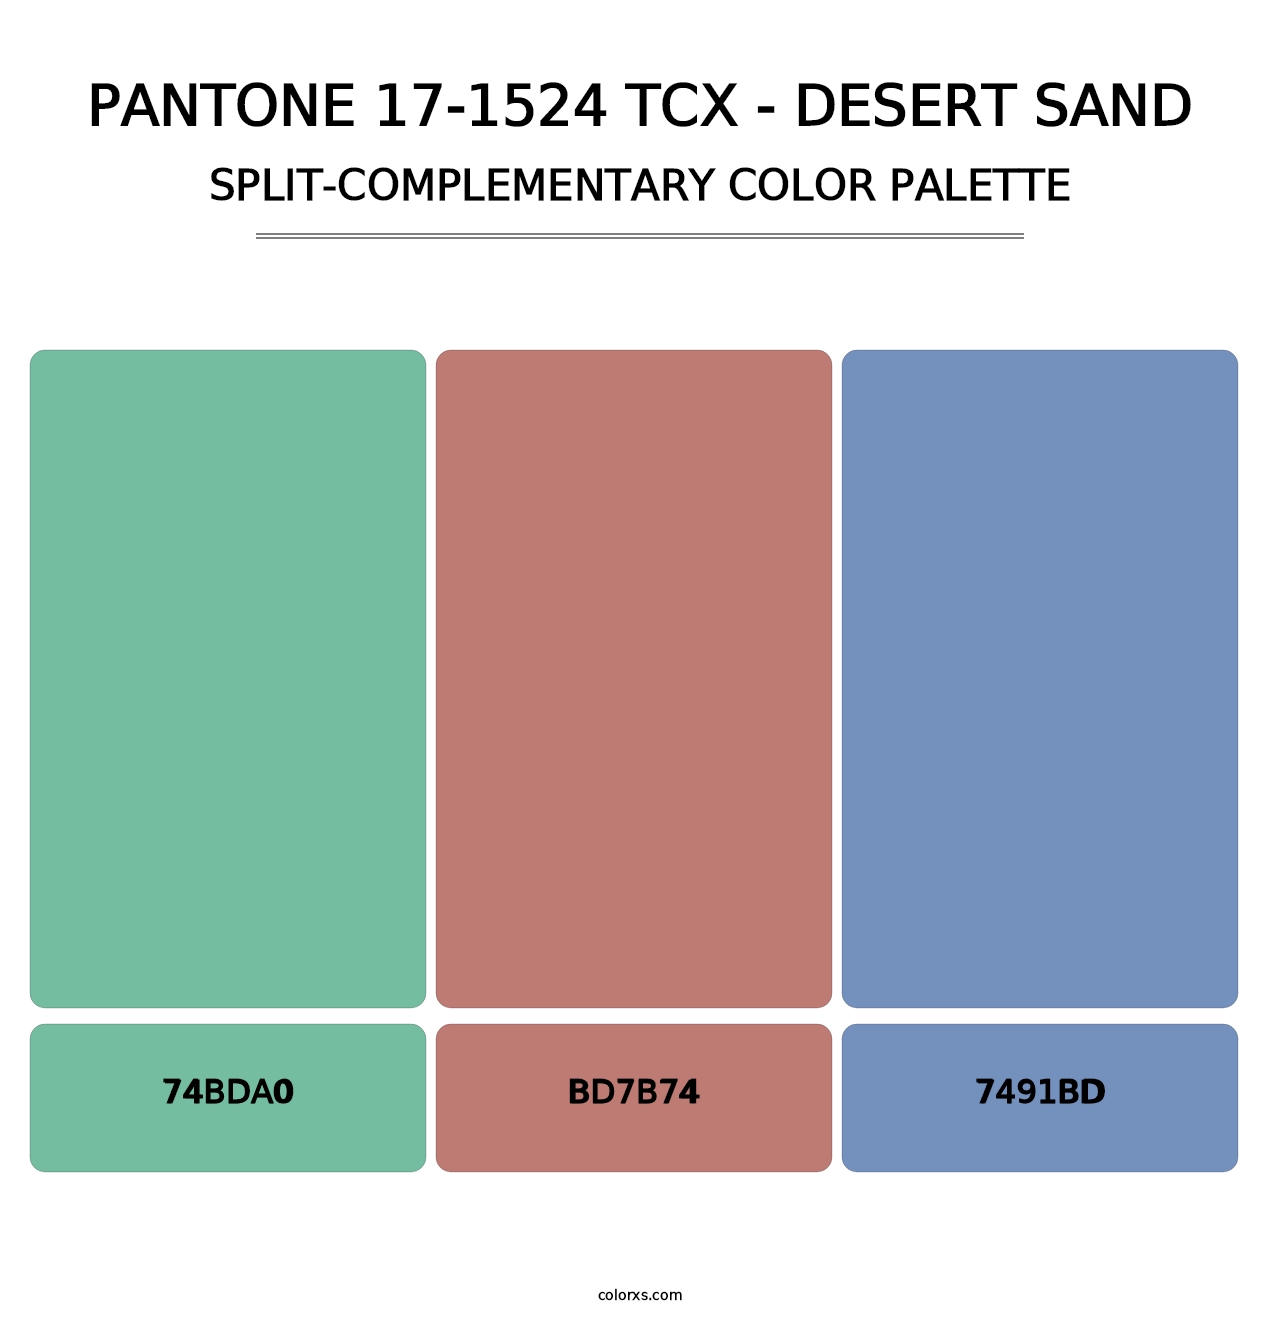 PANTONE 17-1524 TCX - Desert Sand - Split-Complementary Color Palette